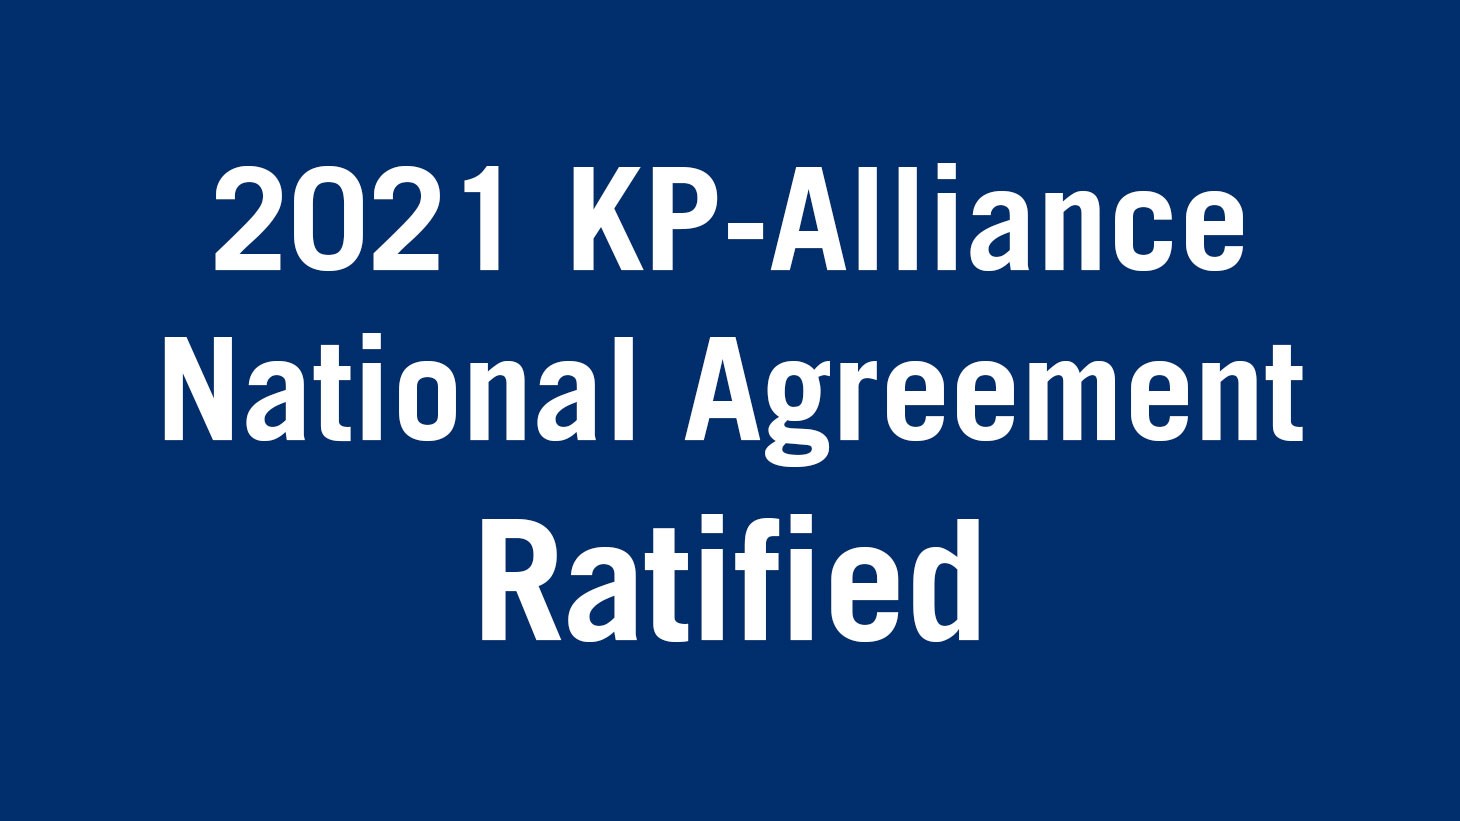 2021 KP-Alliance National Agreement Ratified 